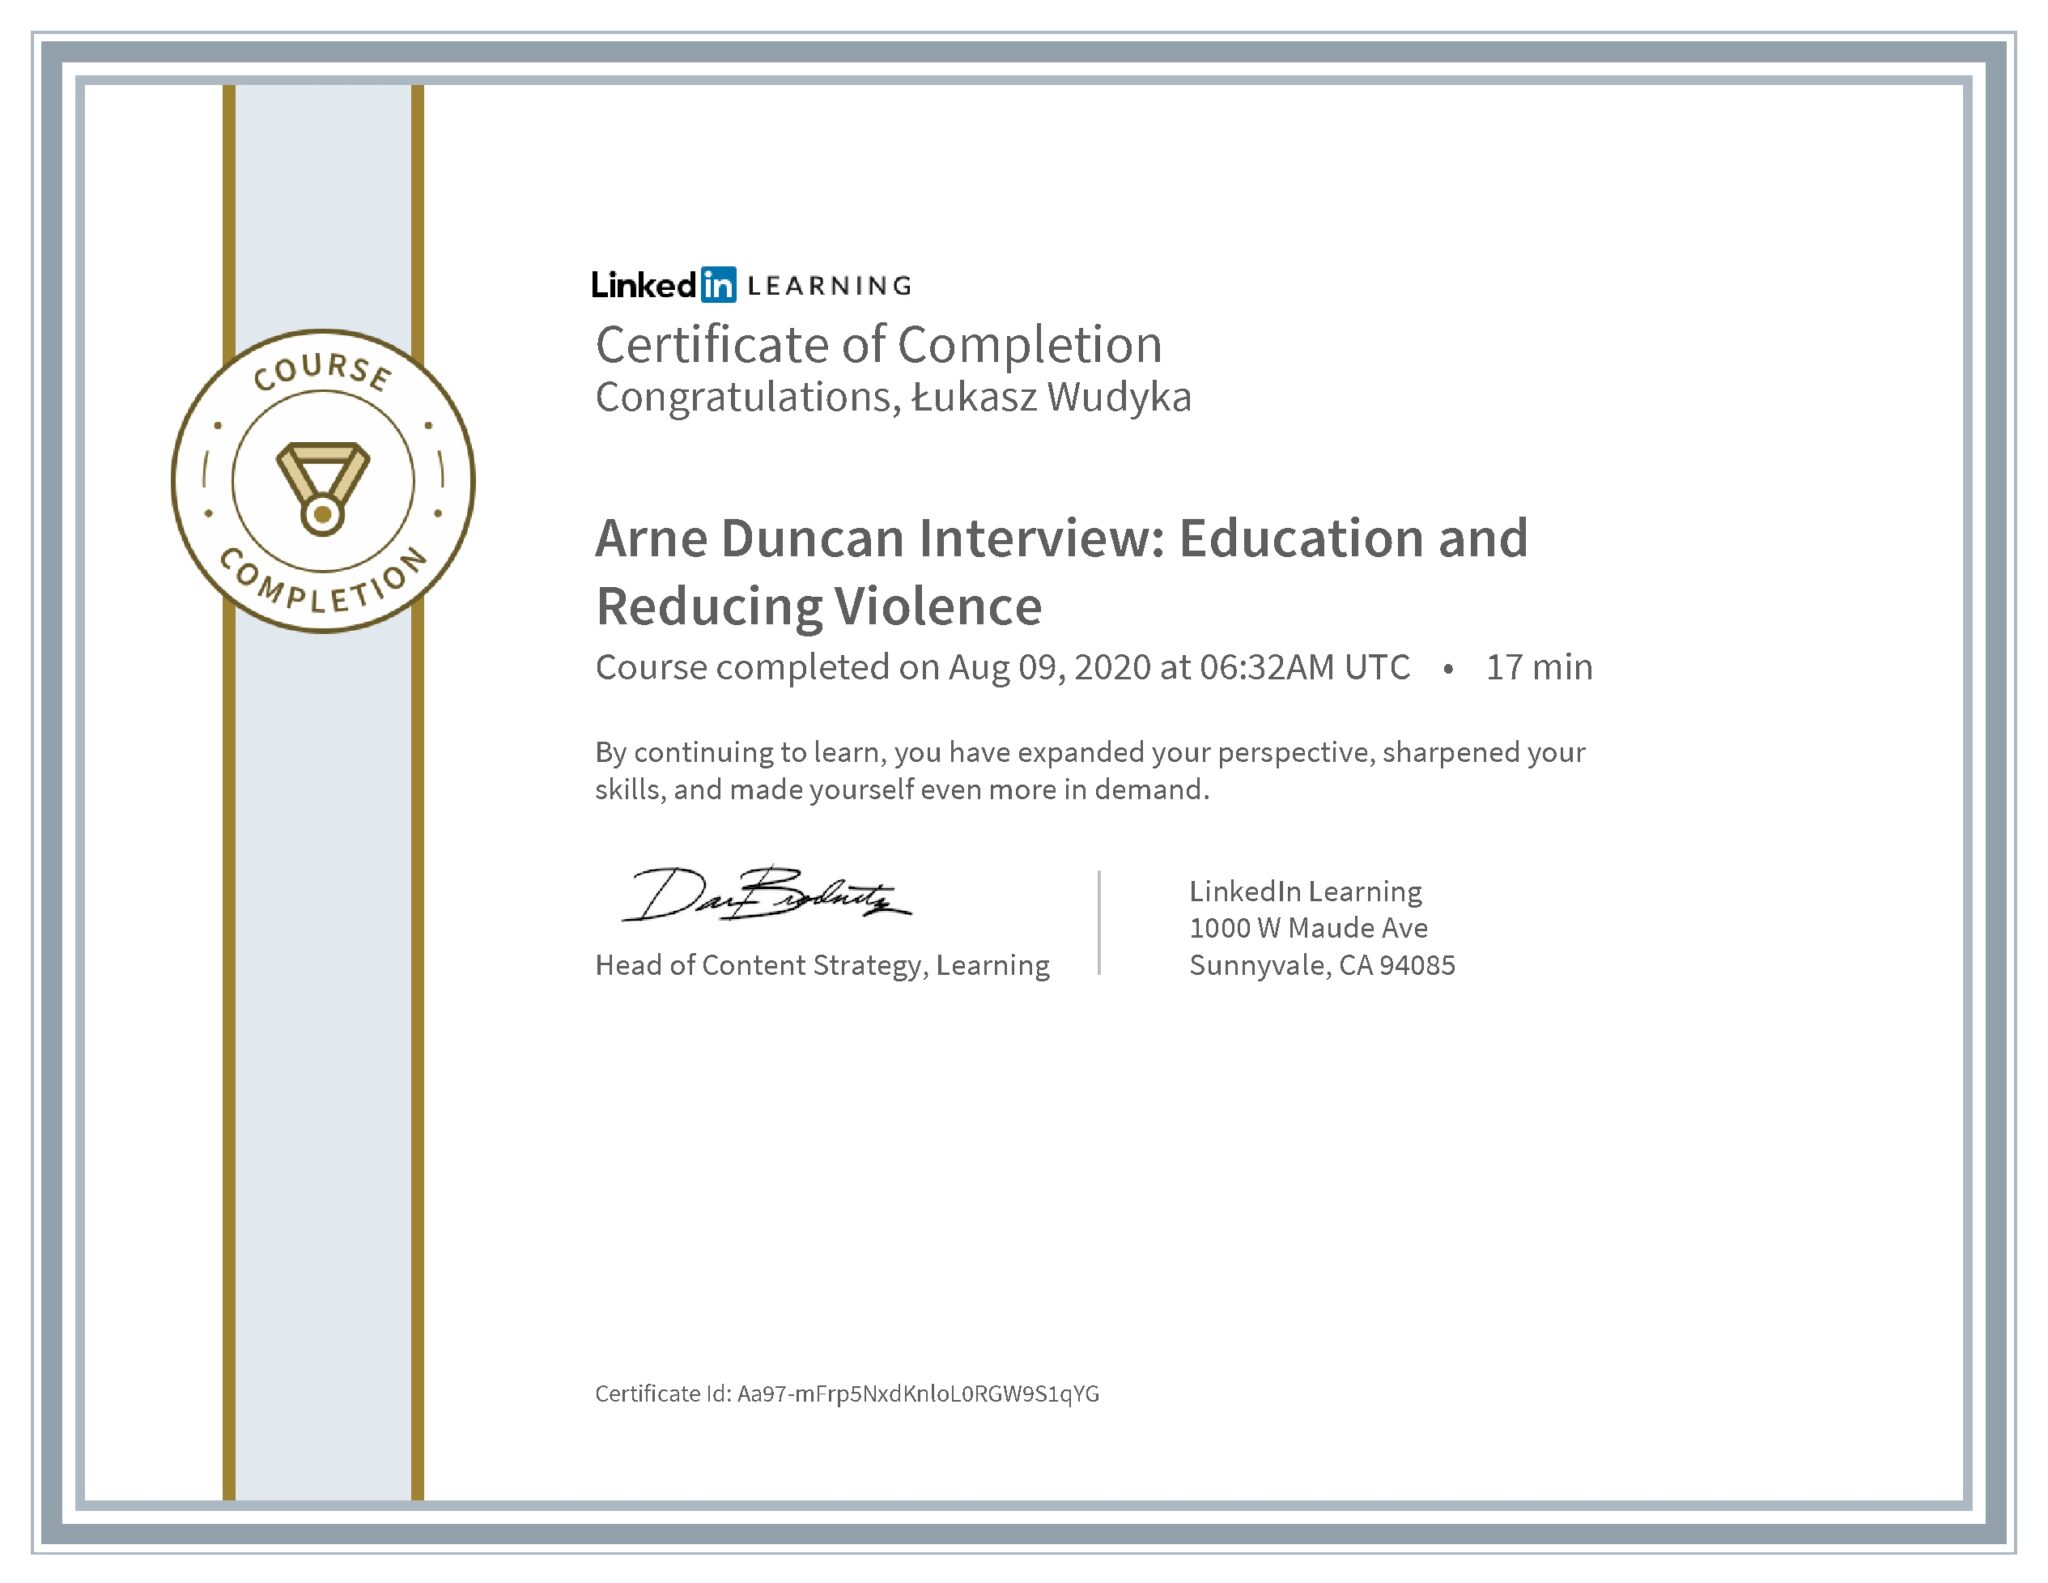 Łukasz Wudyka certyfikat LinkedIn Arne Duncan Interview: Education and Reducing Violence